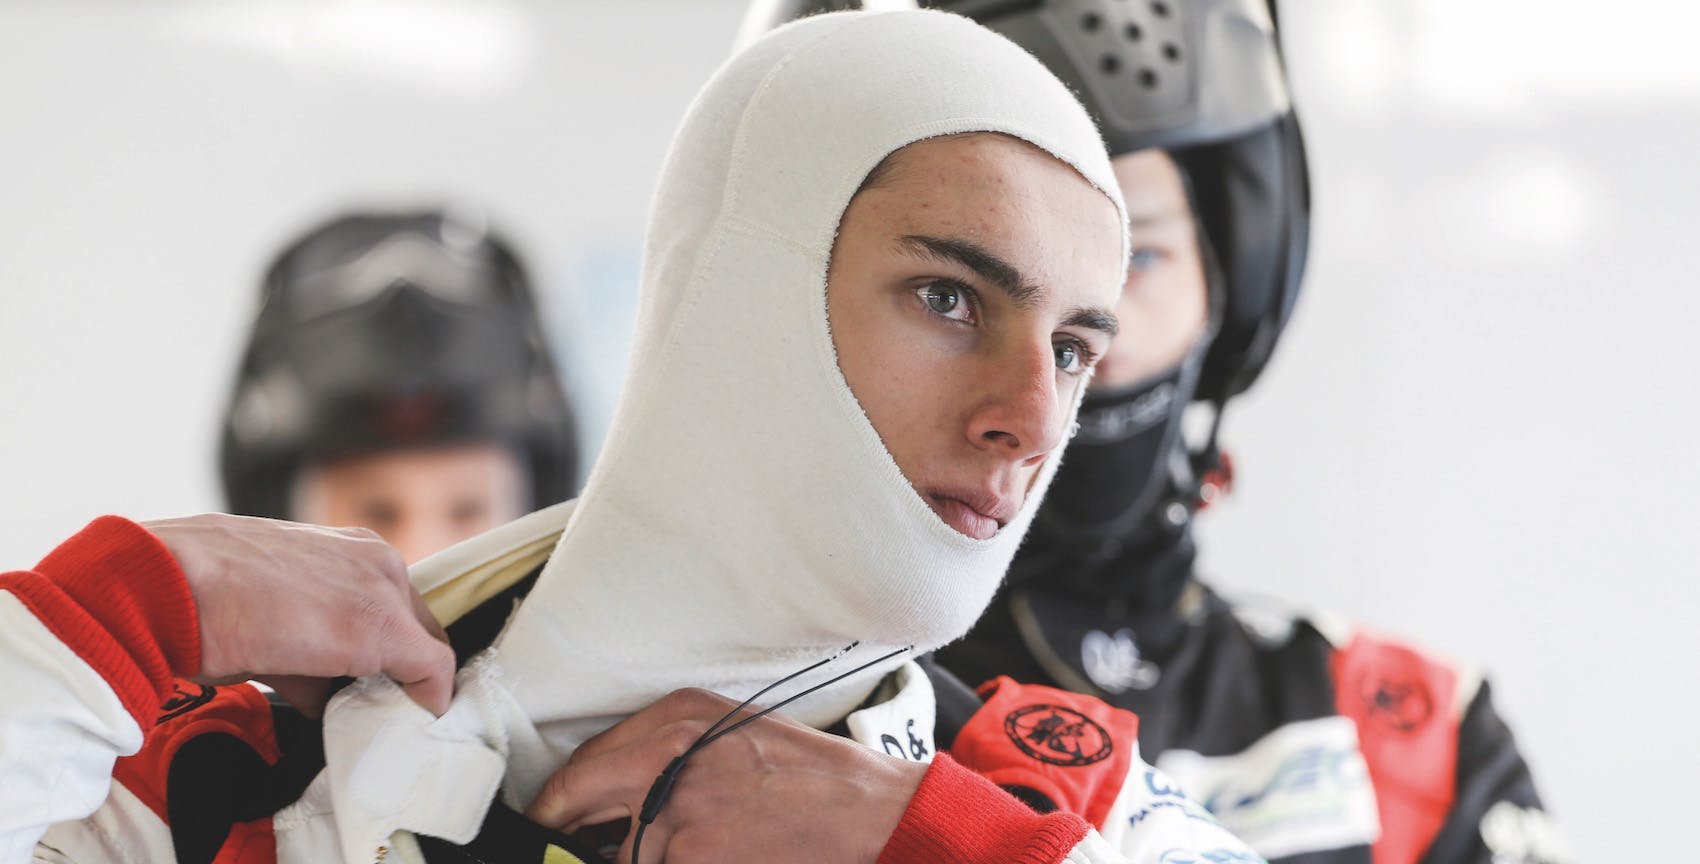 angleterre auto championnat du monde endurance fia motorsport wec silverstone clothing apparel person human helmet